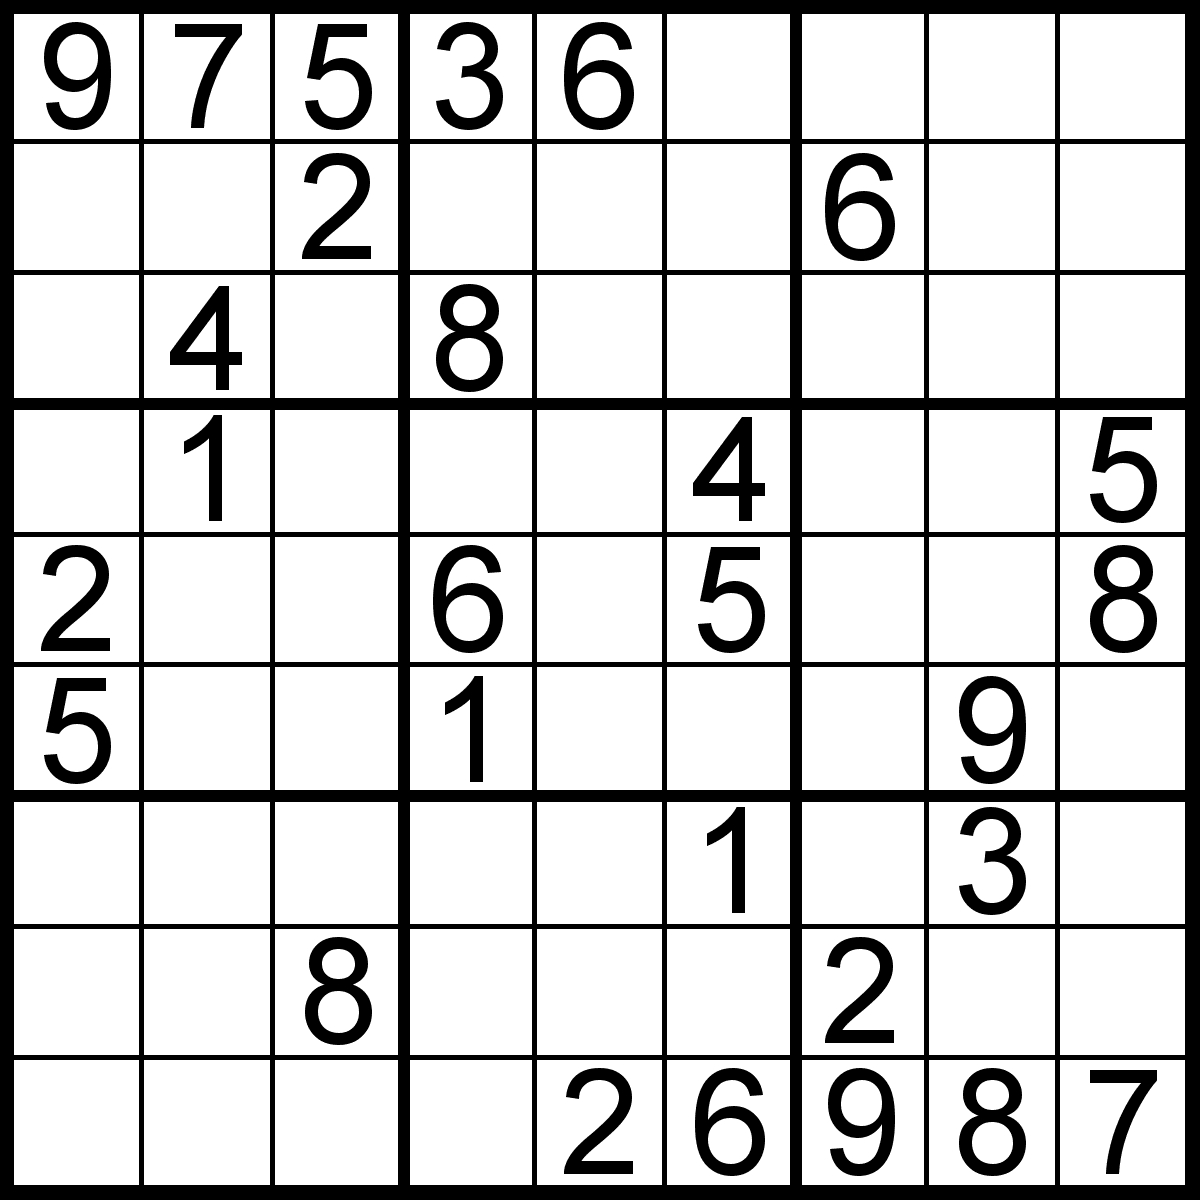 Sudoku Puzzles | Brain Teaser Called Sudoku Puzzles | Sudoku